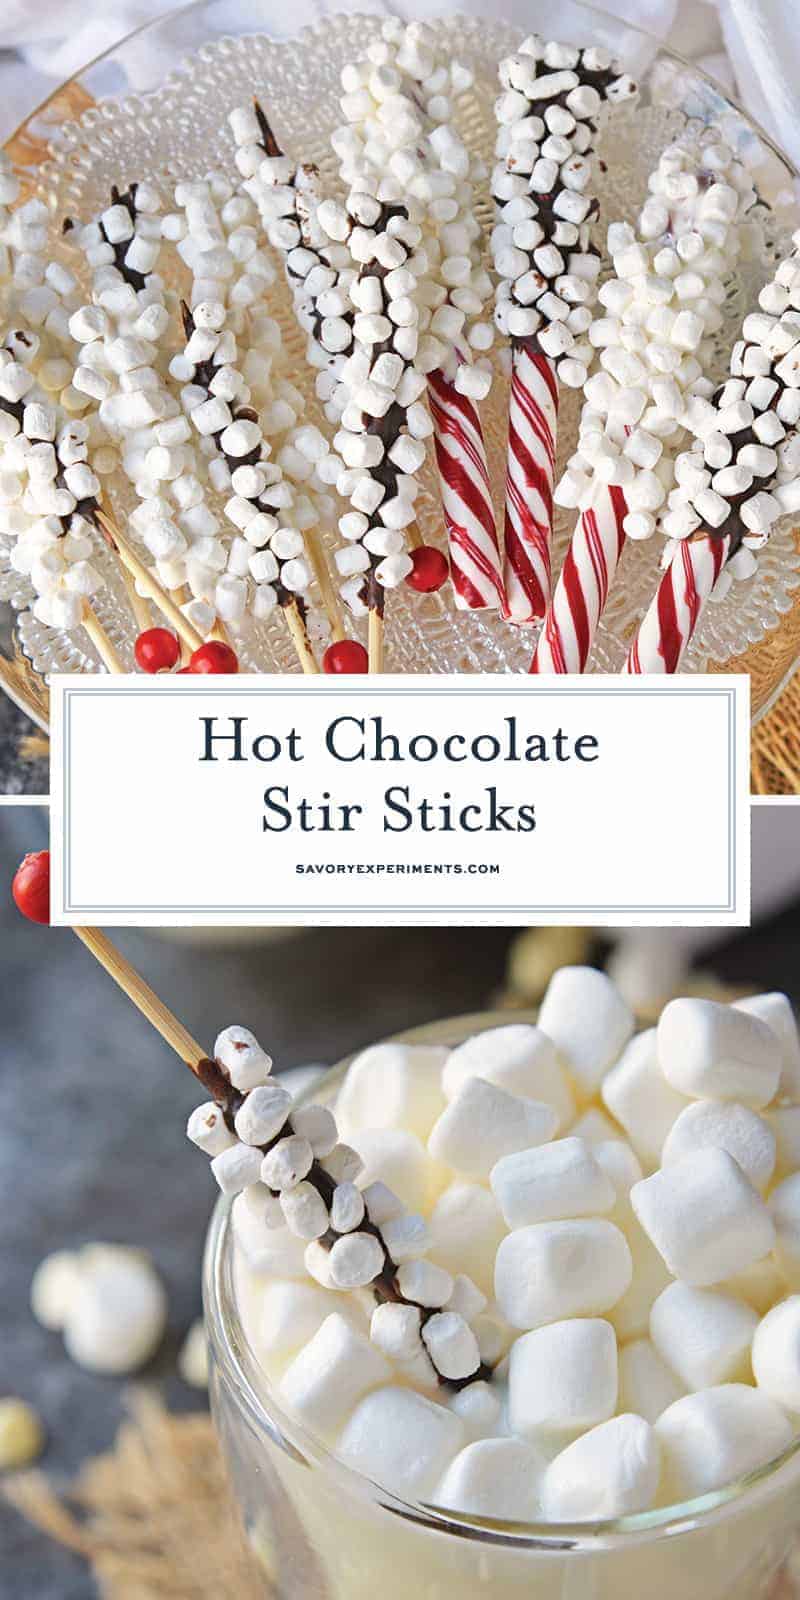 https://www.savoryexperiments.com/wp-content/uploads/2018/09/hot-chocolate-stir-sticks-PIN-1.jpg